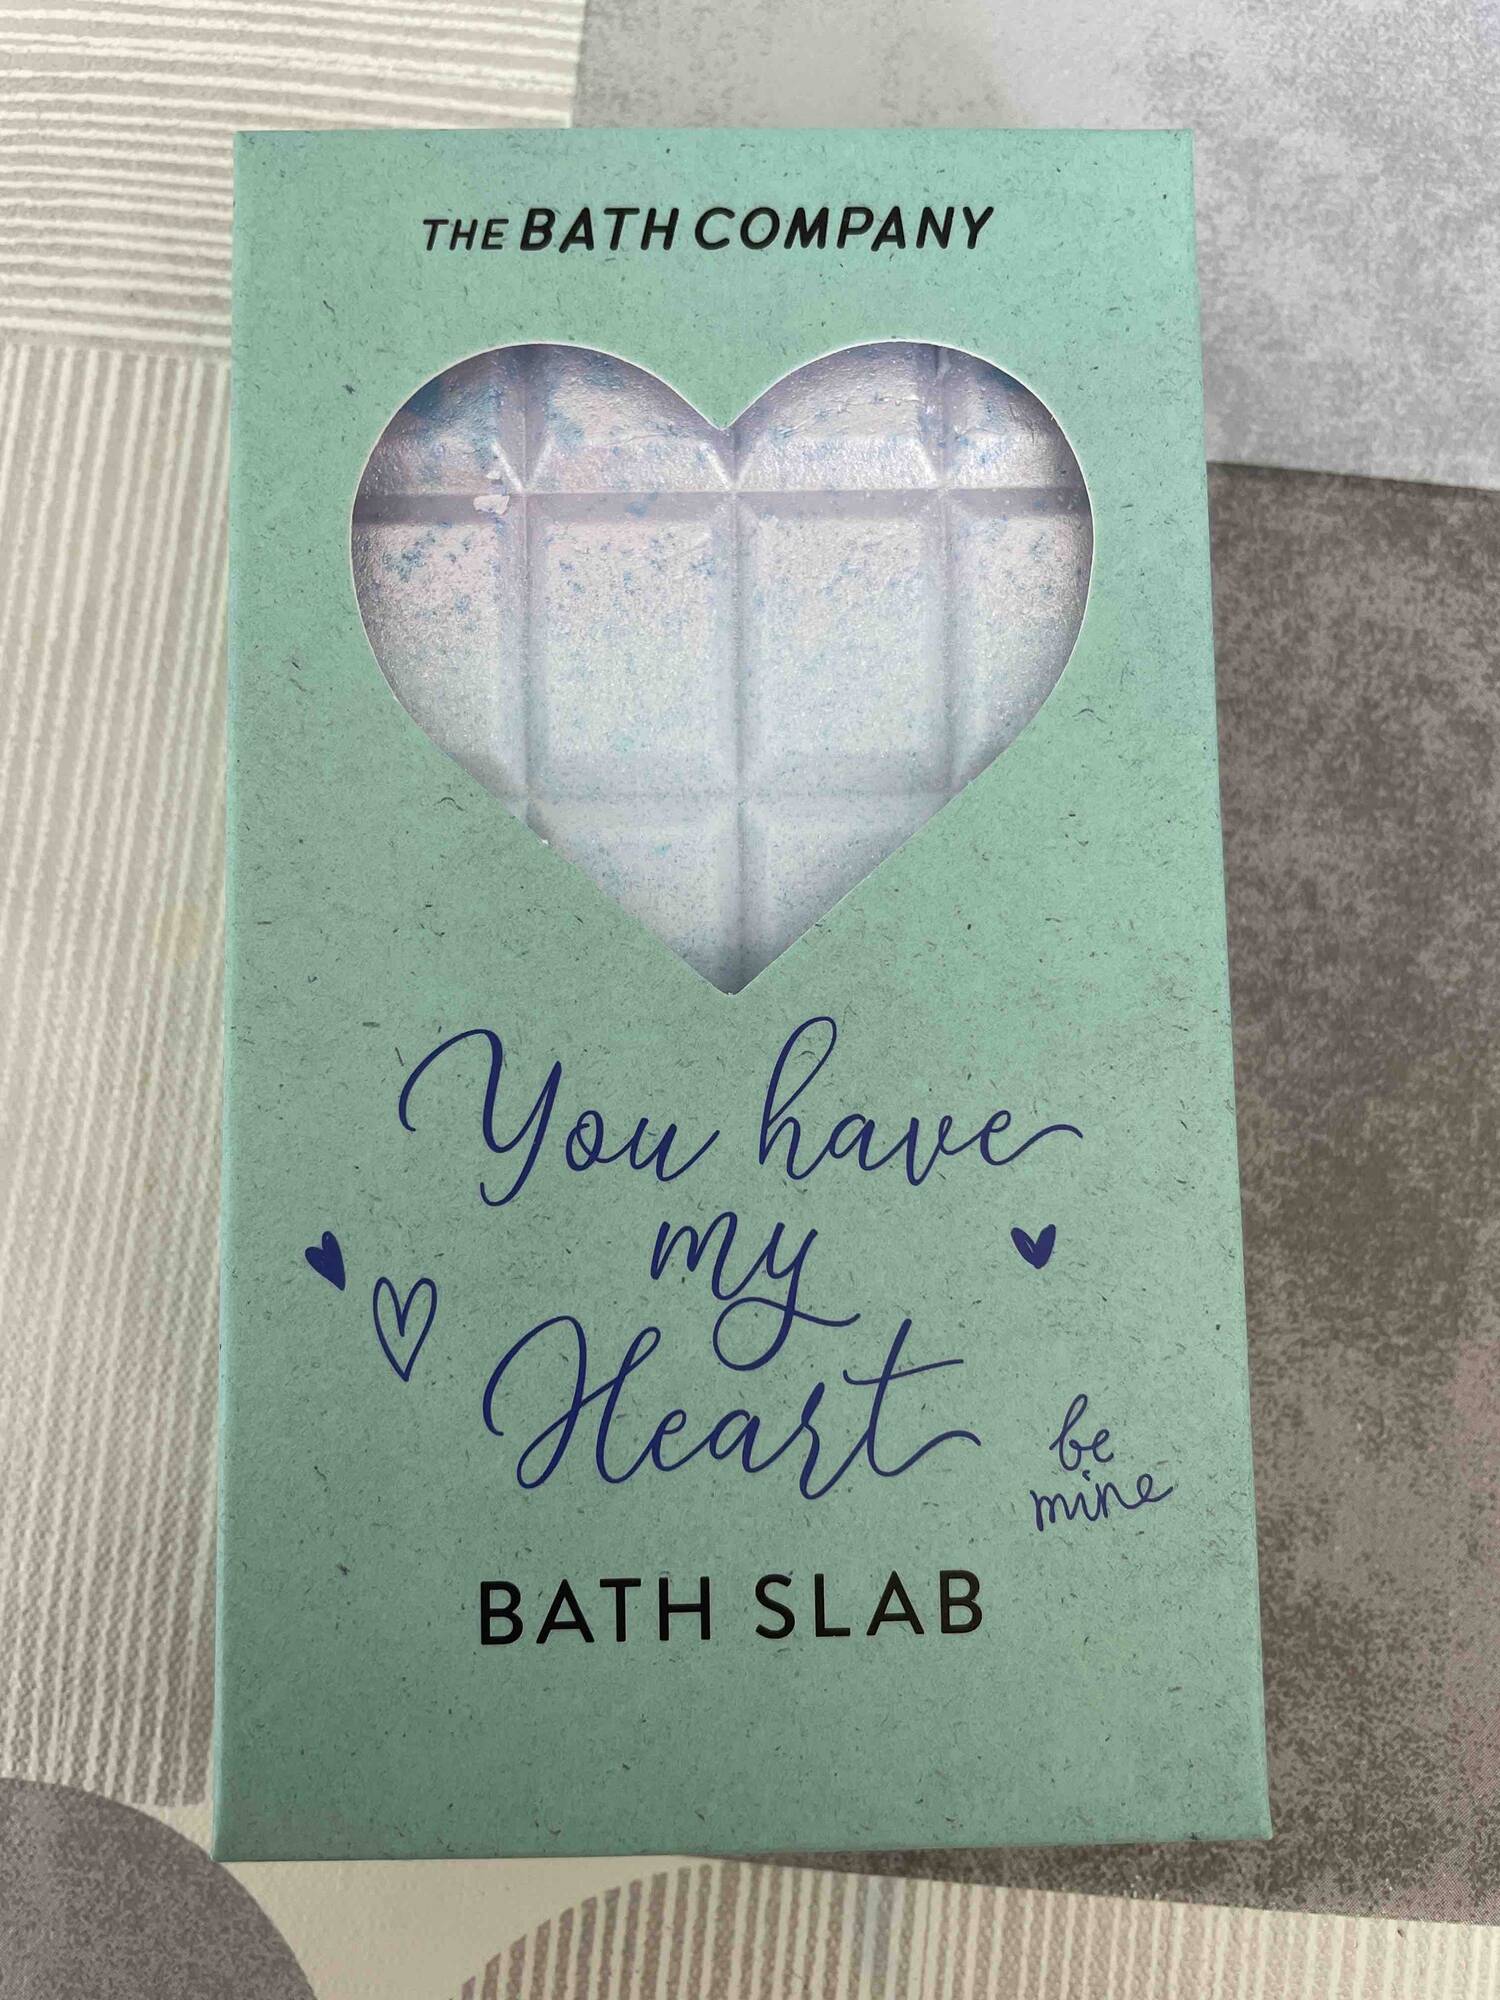 THE BATH COMPANY - You have my heart  - Bath slab